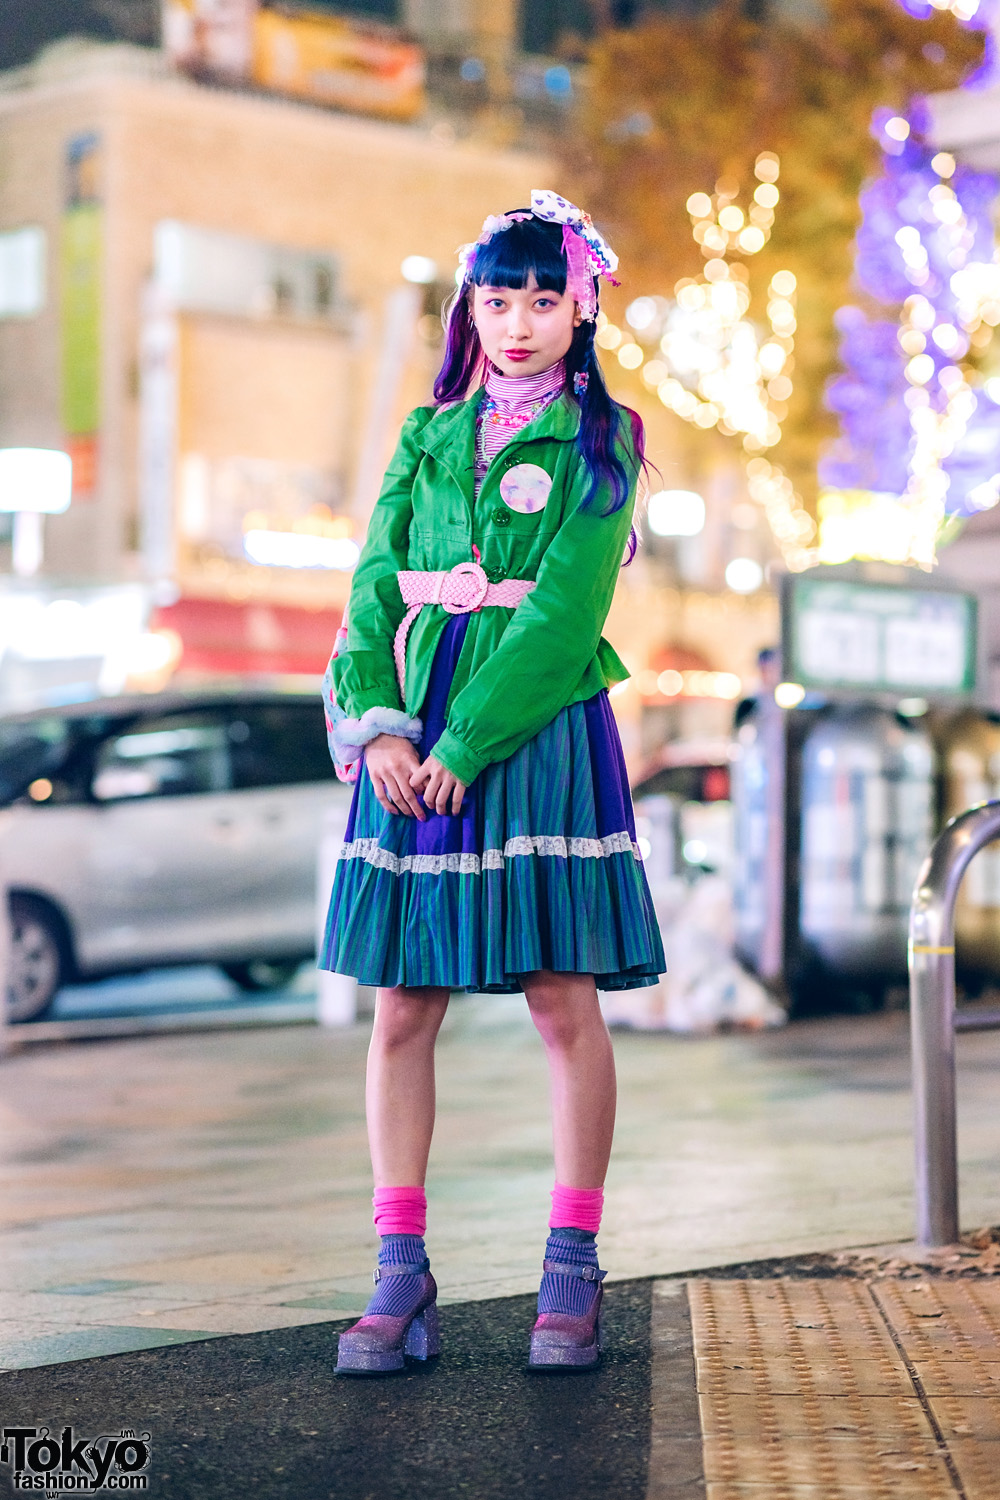 6%DOKIDOKI Harajuku Street Style w/ Kawaii Fashion & Colorful Hair, Nile Perch, Vintage Items & Office Kiko Glitter Shoes